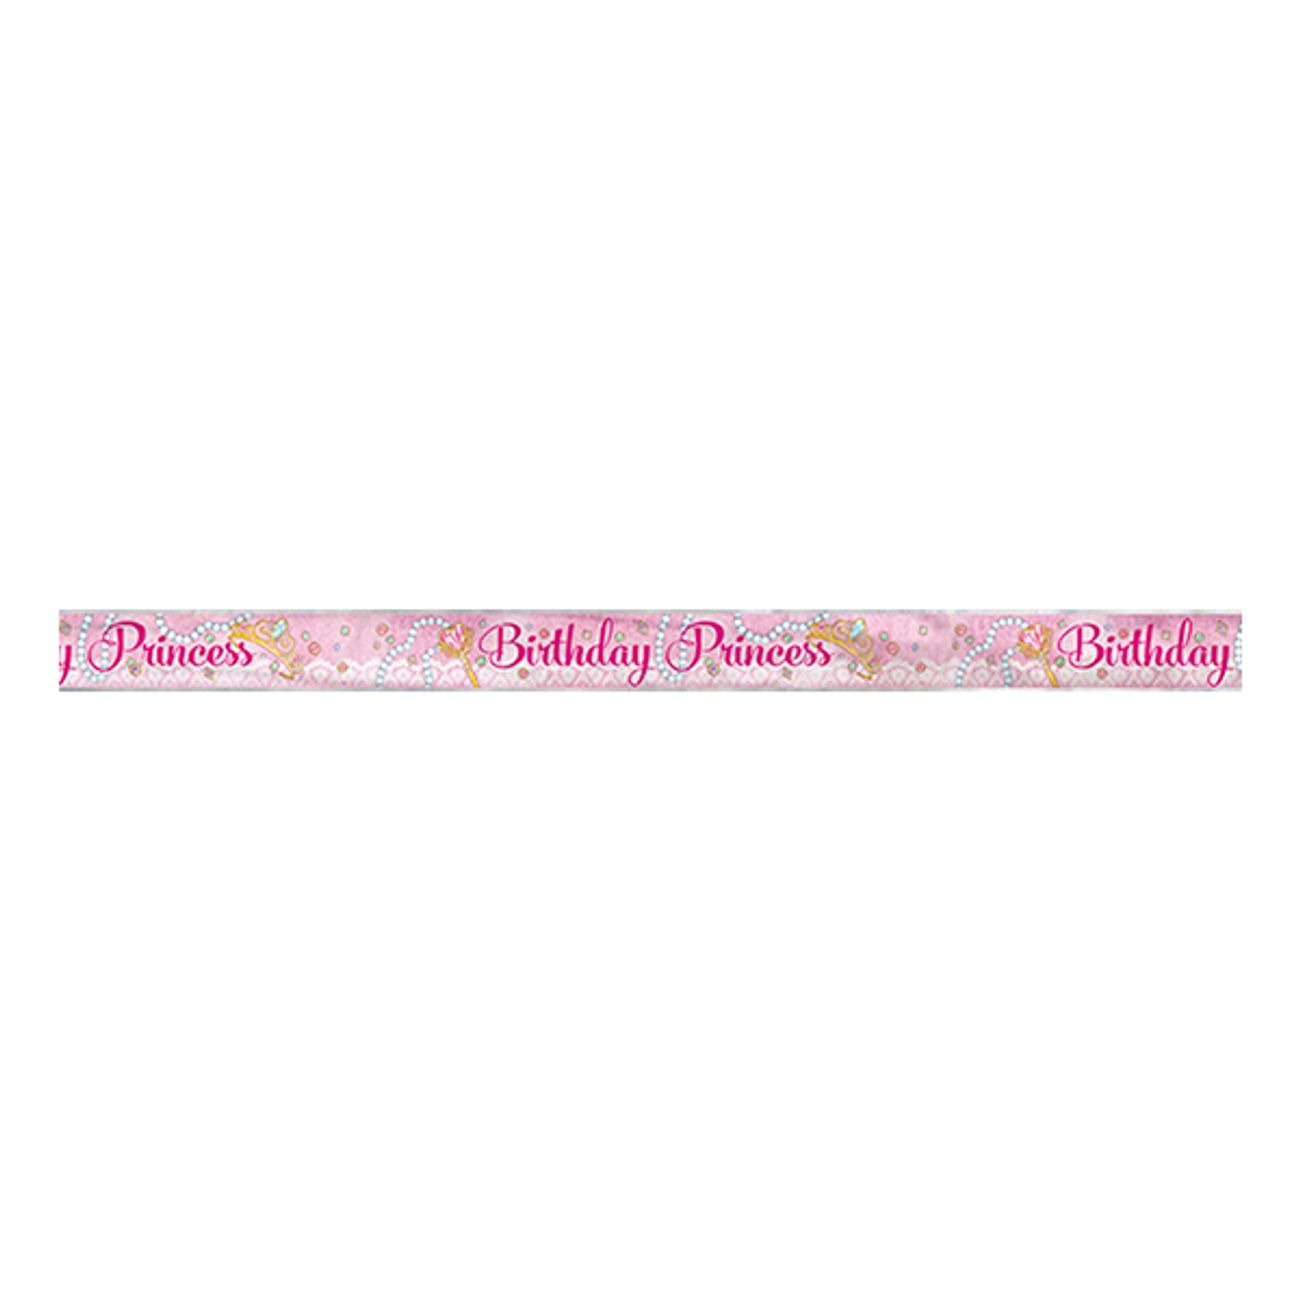 banner-birthday-princess-1